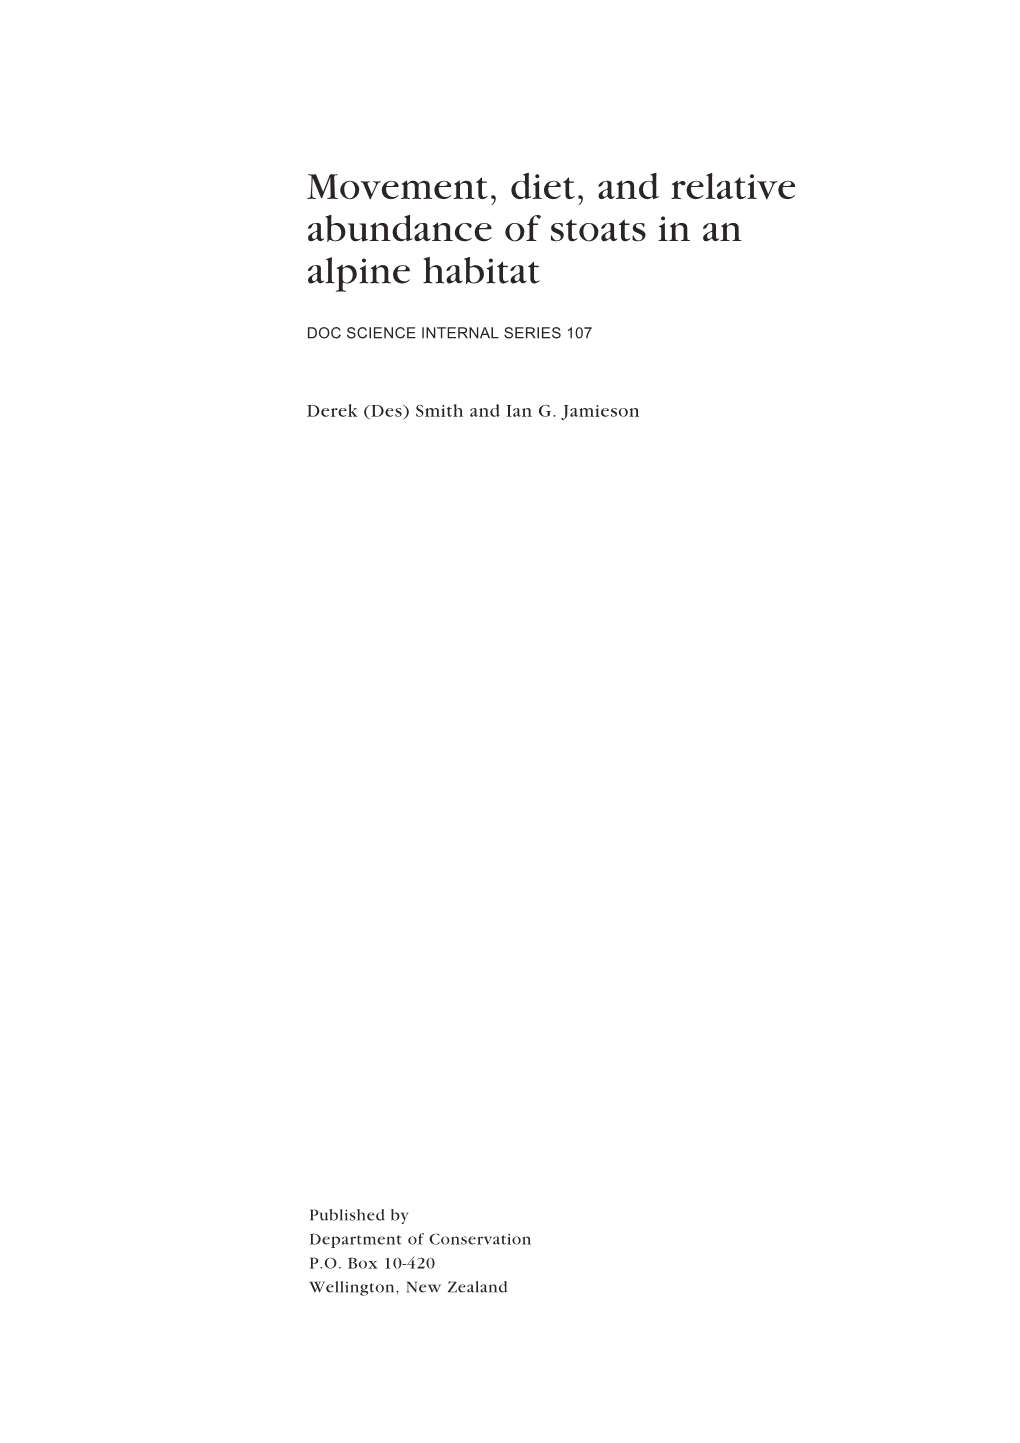 Movement, Diet, and Relative Abundance of Stoats in an Alpine Habitat